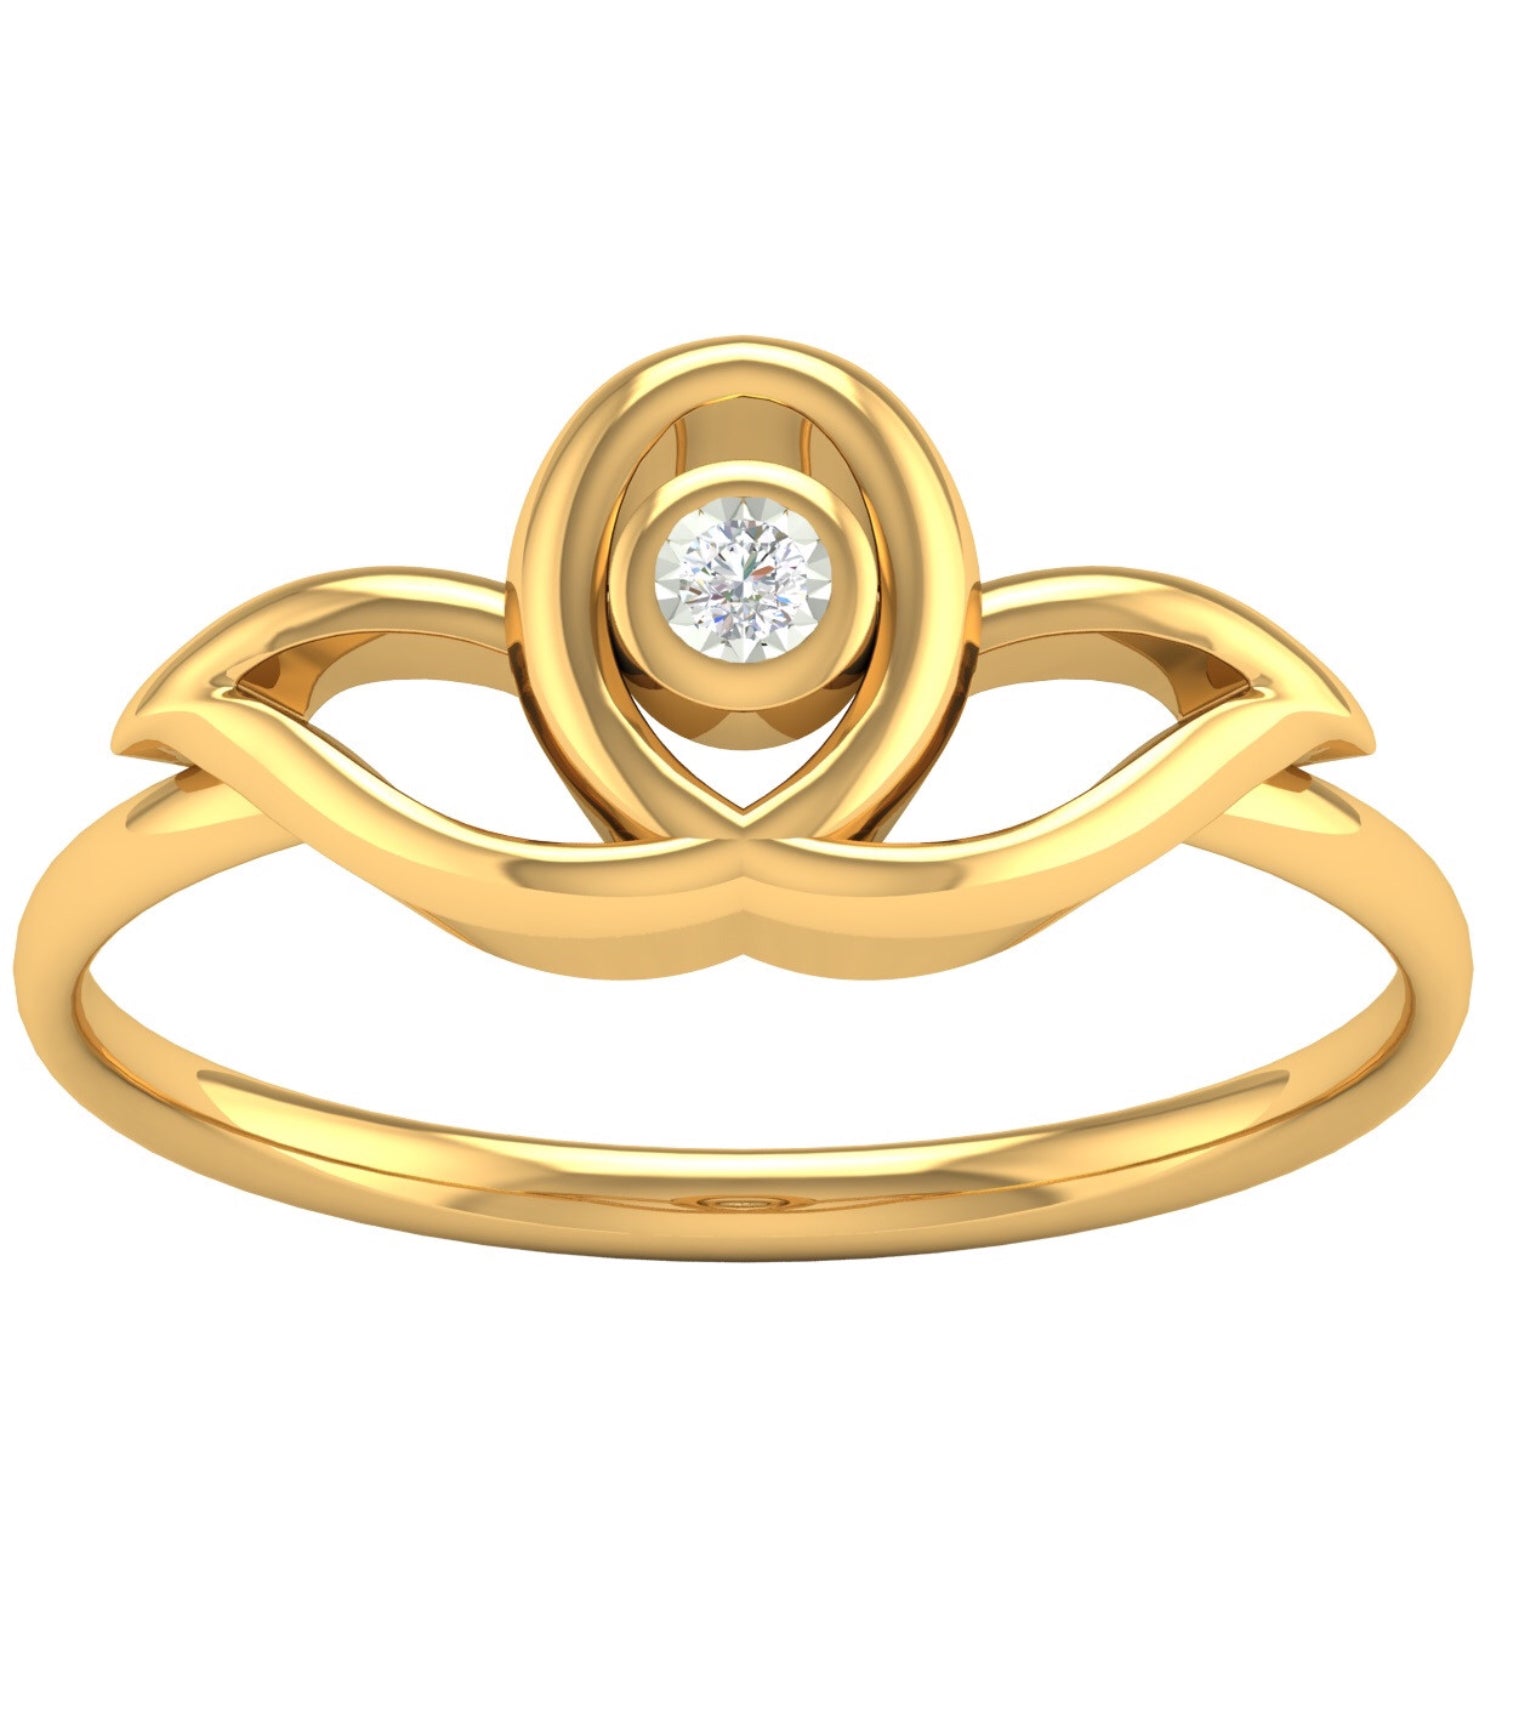 1 Gram Gold Plated Krishna With Diamond Delicate Design Ring For Men -  Style B248, सोने का पानी चढ़ी हुई अंगूठी - Soni Fashion, Rajkot | ID:  2850381207933